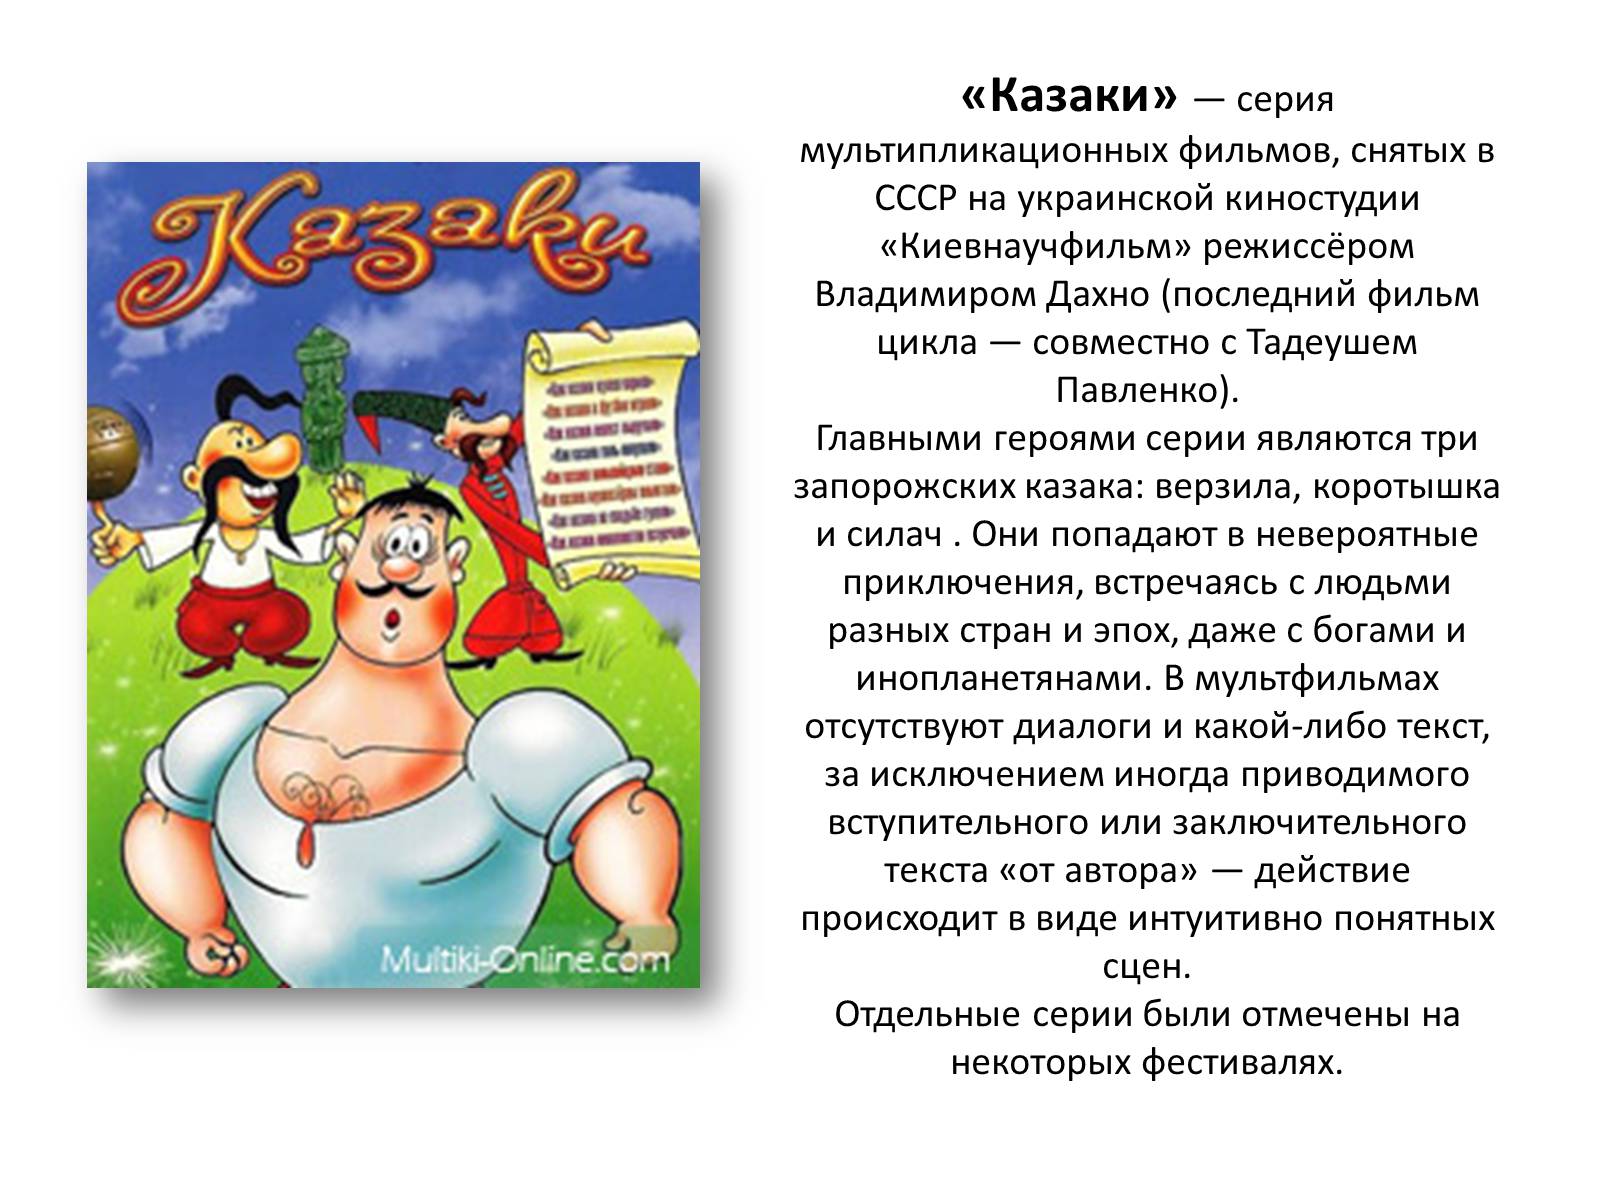 Презентація на тему «Украинские мультфильмы» - Слайд #8